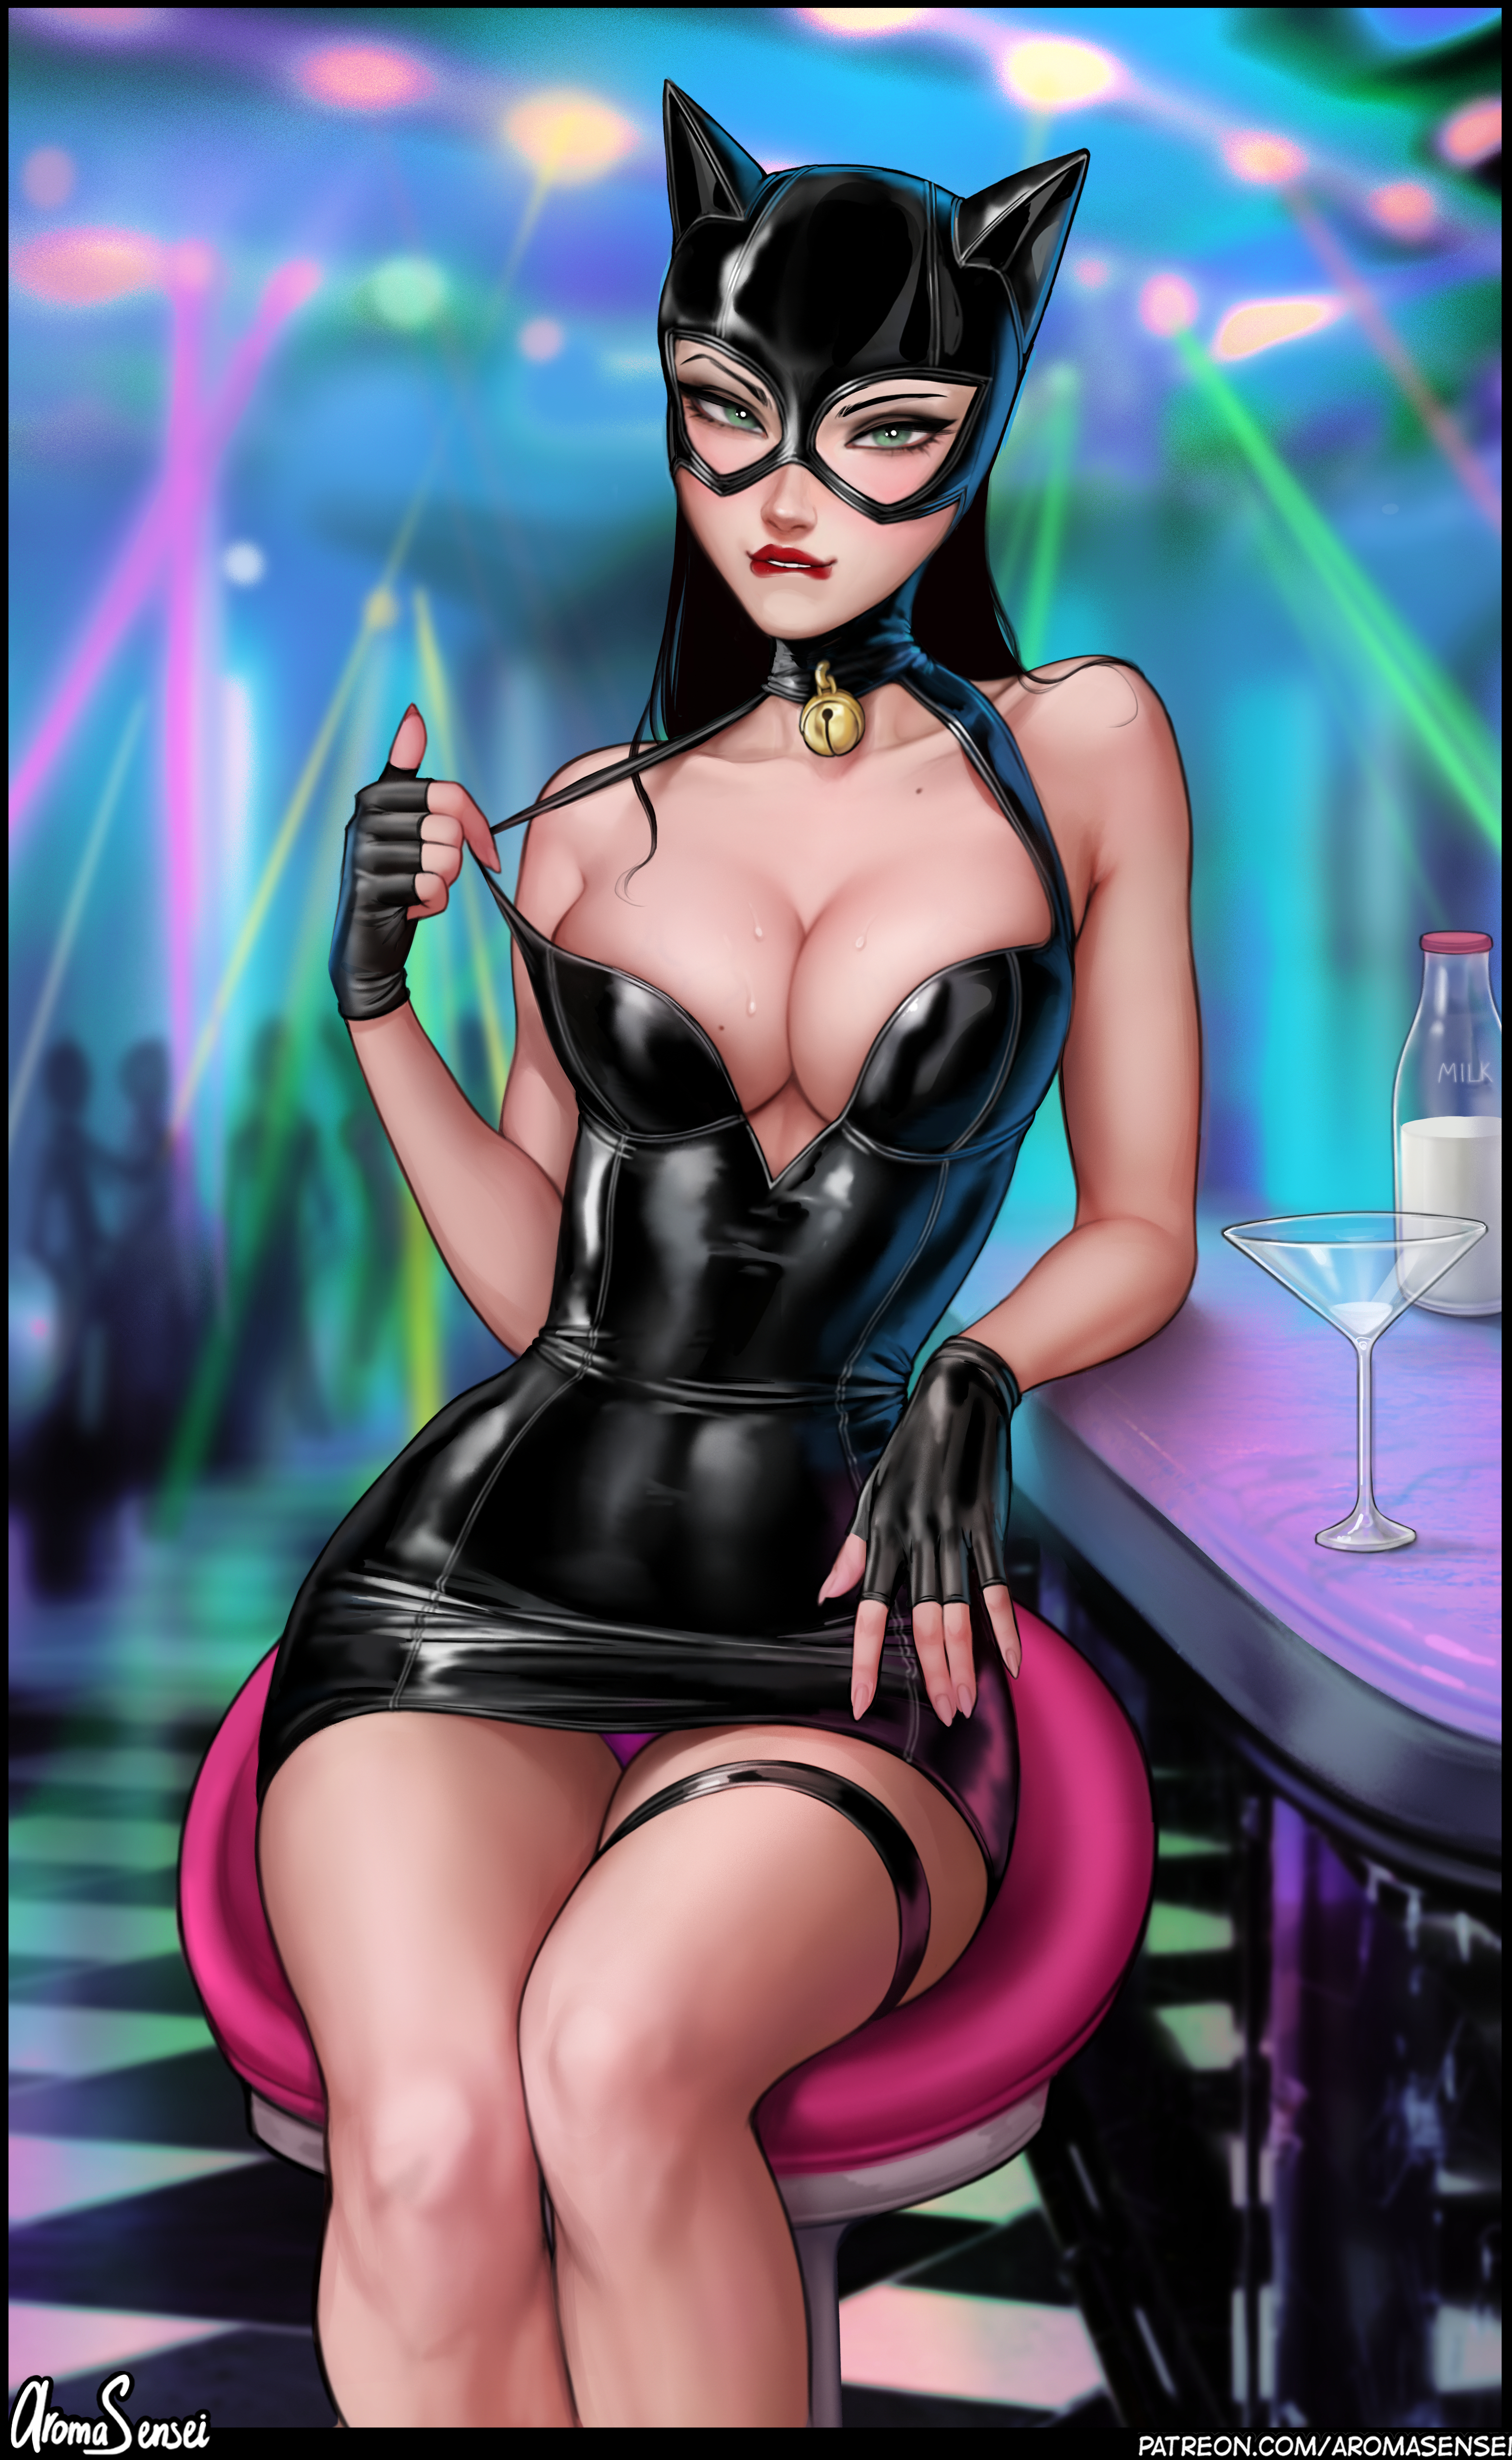 General 3073x5000 Catwoman DC Comics women fictional character dress black dress tight dress cleavage upskirt panties milk mask cat mask biting lips 2D artwork drawing fan art Aroma Sensei